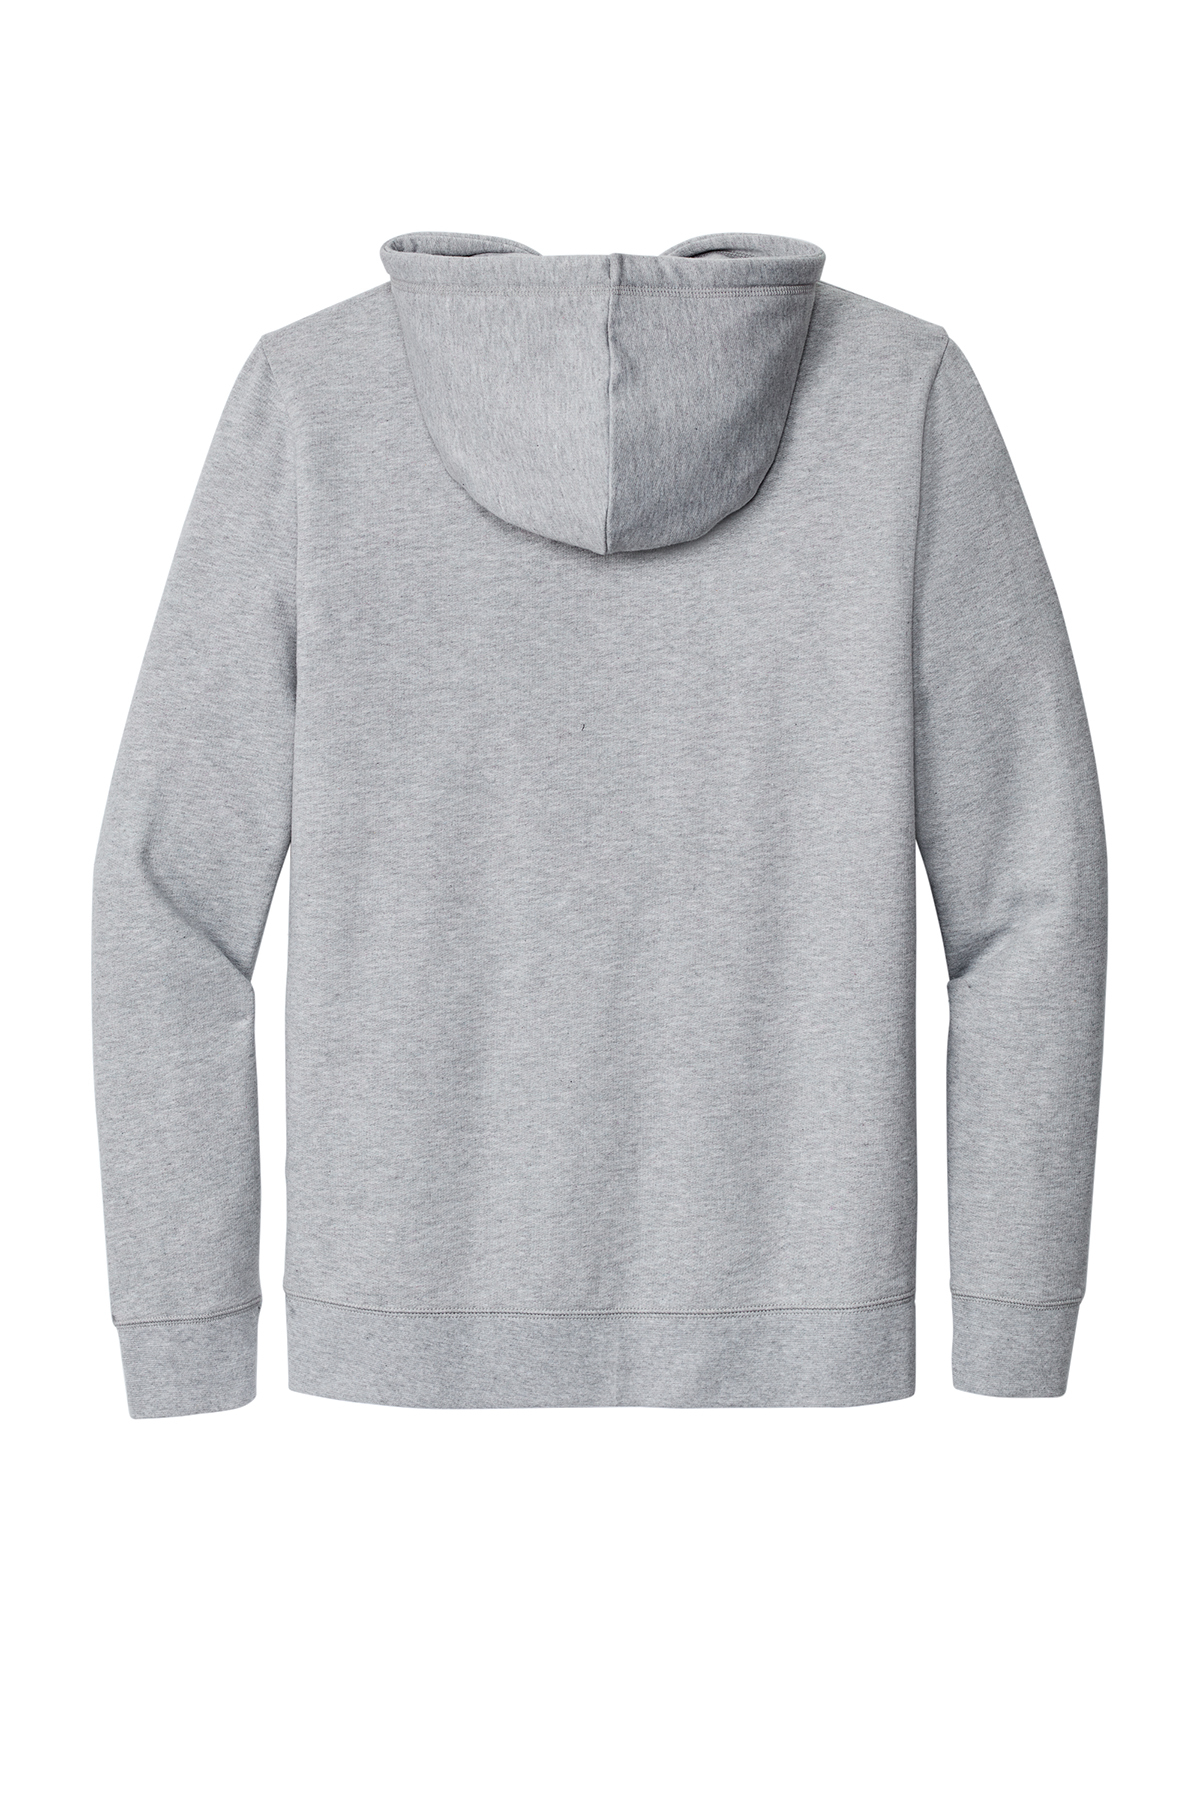 New Era Comeback Fleece Full-Zip Hoodie | Product | SanMar